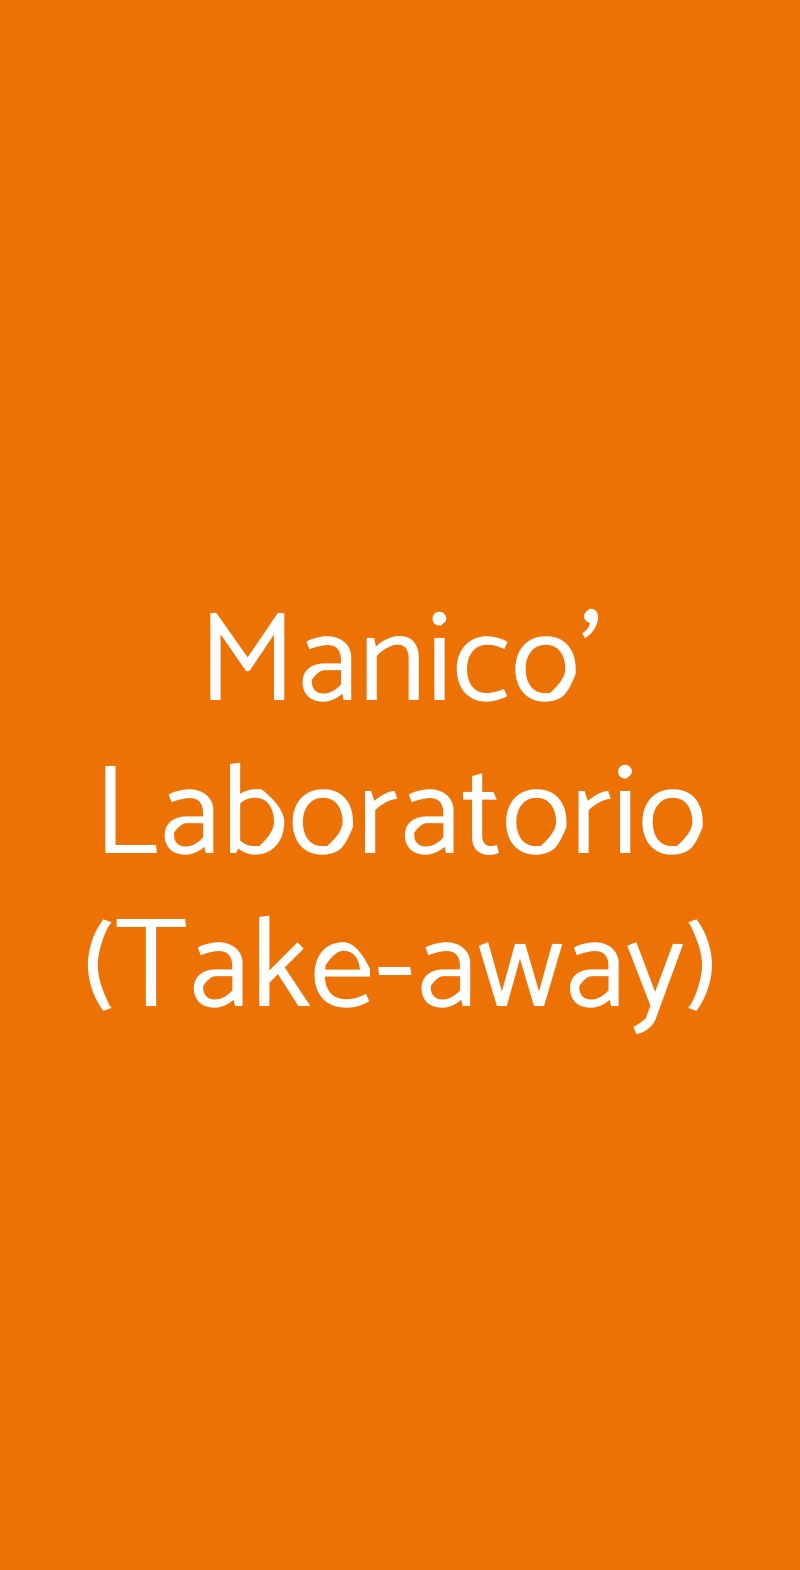 Manico' Laboratorio (Take-away) Bologna menù 1 pagina